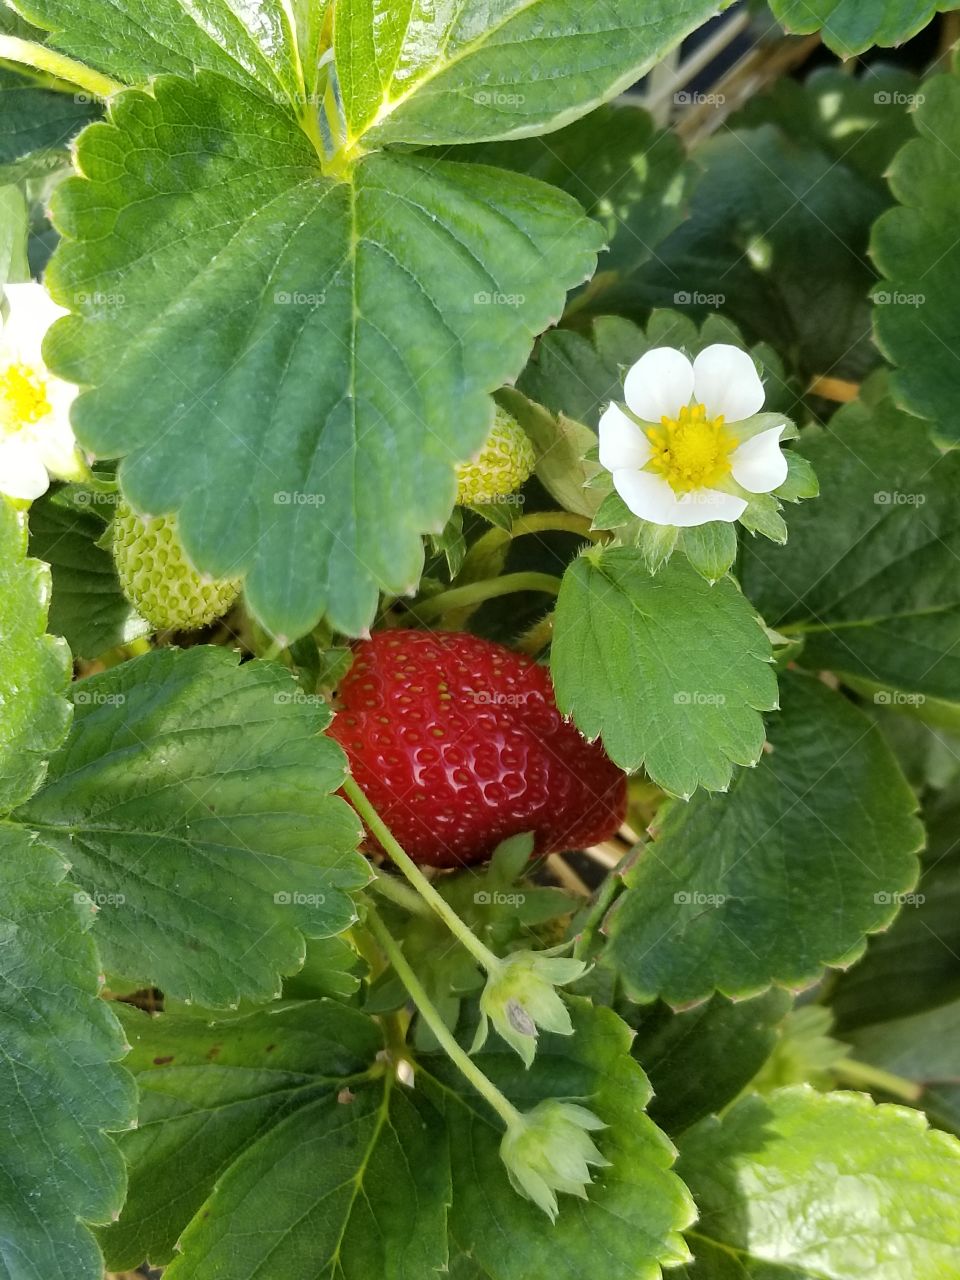 Strawberry peeking through leaves